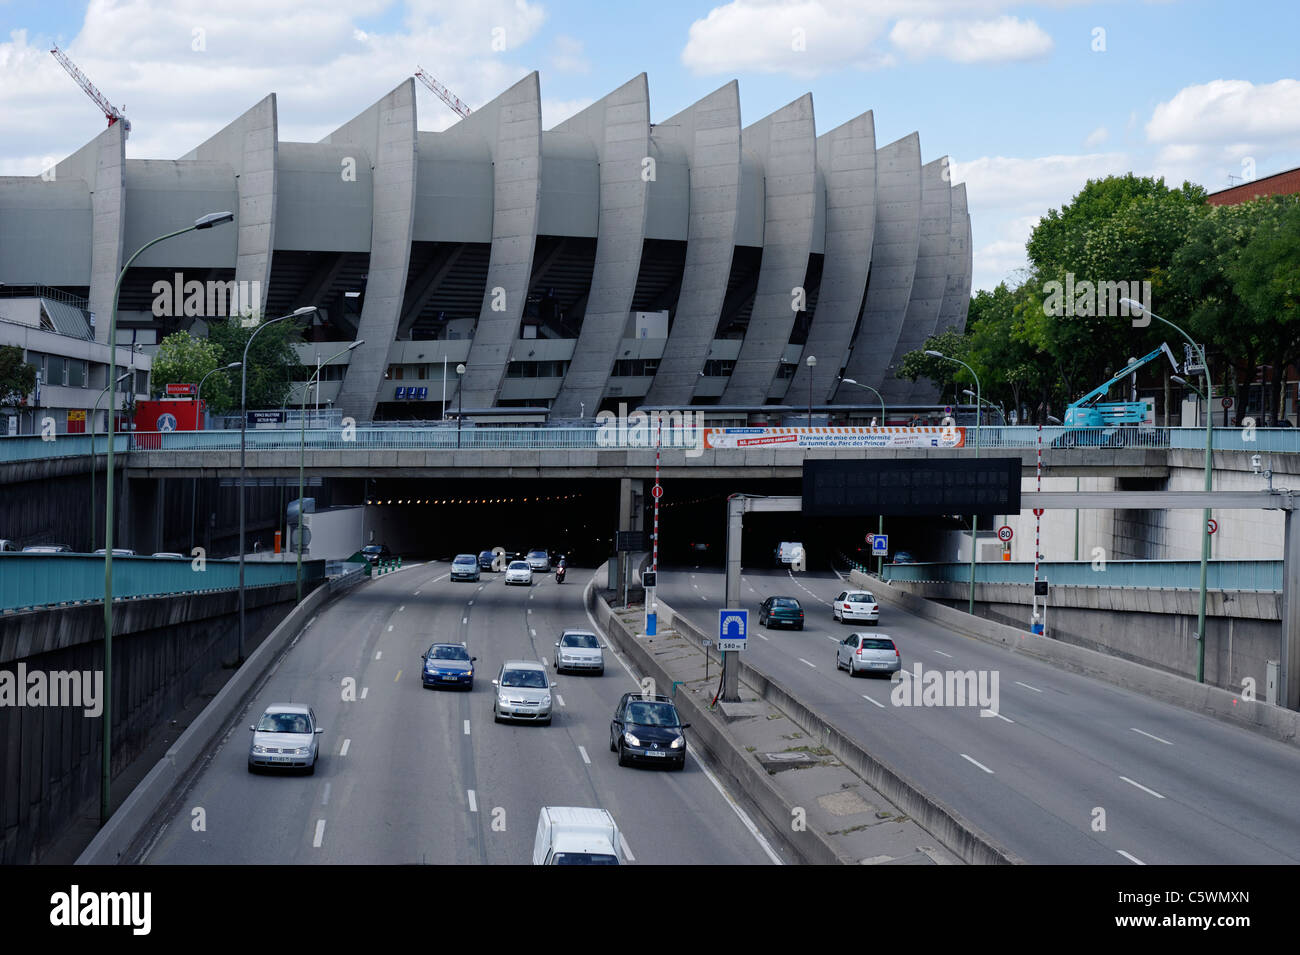 Eight lanes of traffic pass under Paris St Germain club stadium Parc Des Princes in Paris, France. Stock Photo